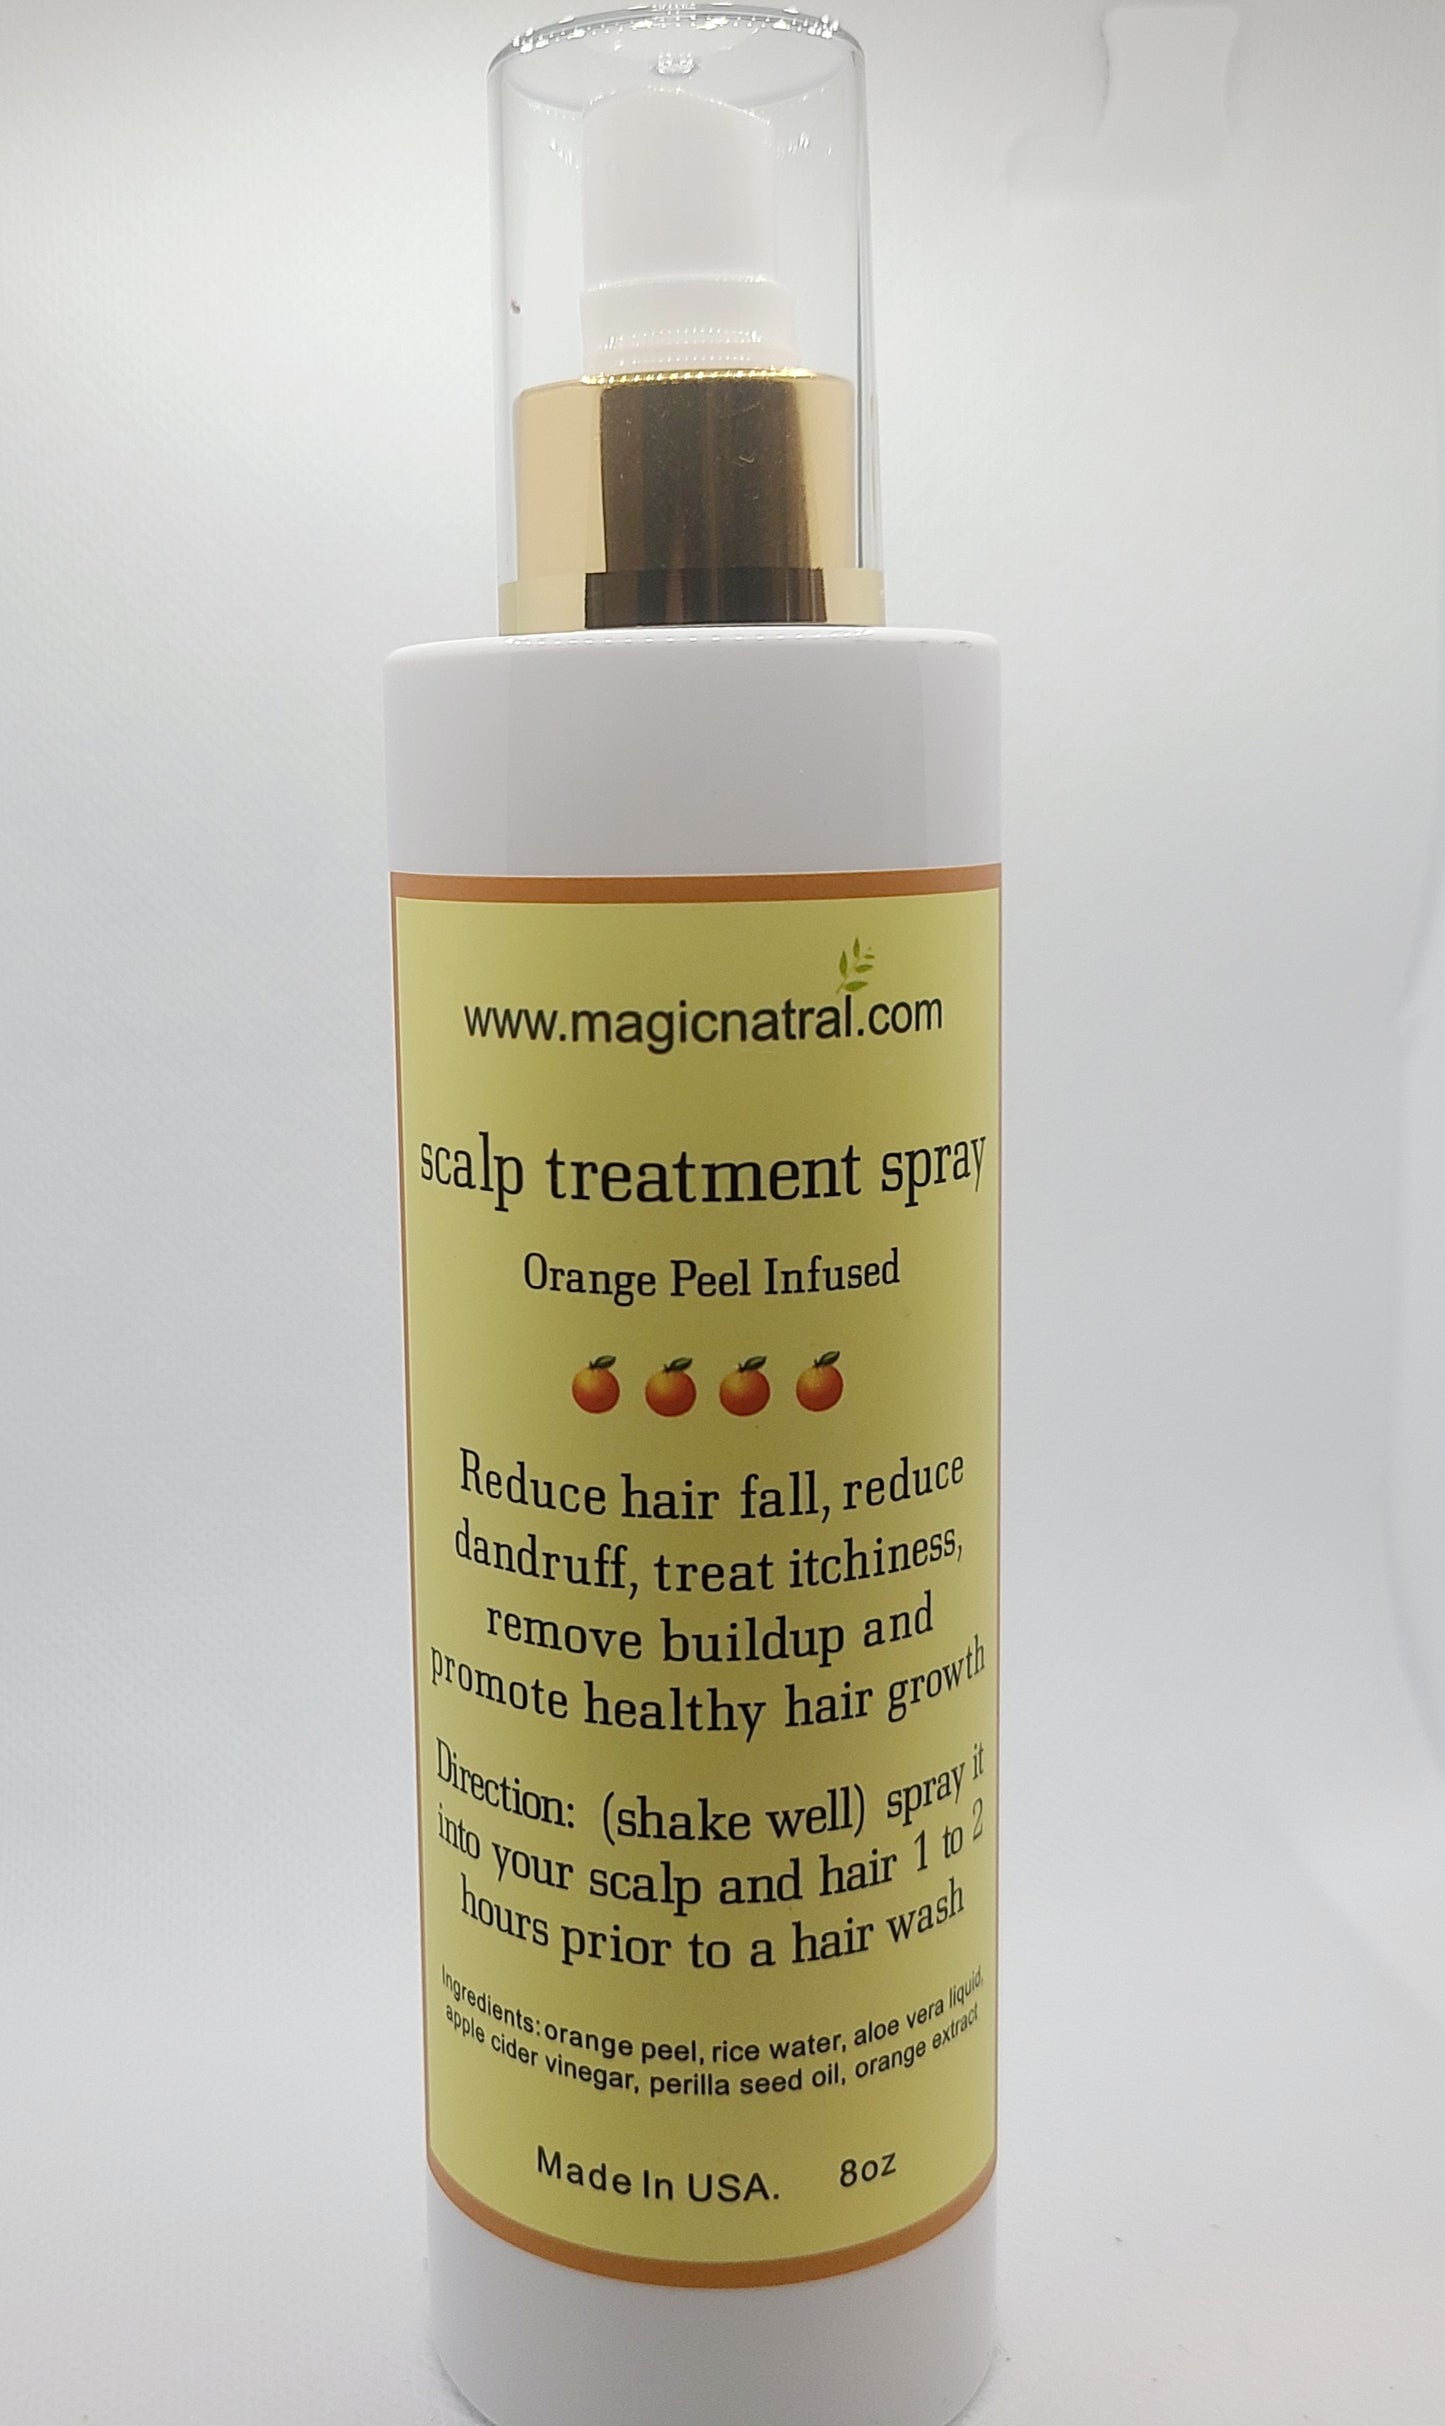 Scalp treatment spray